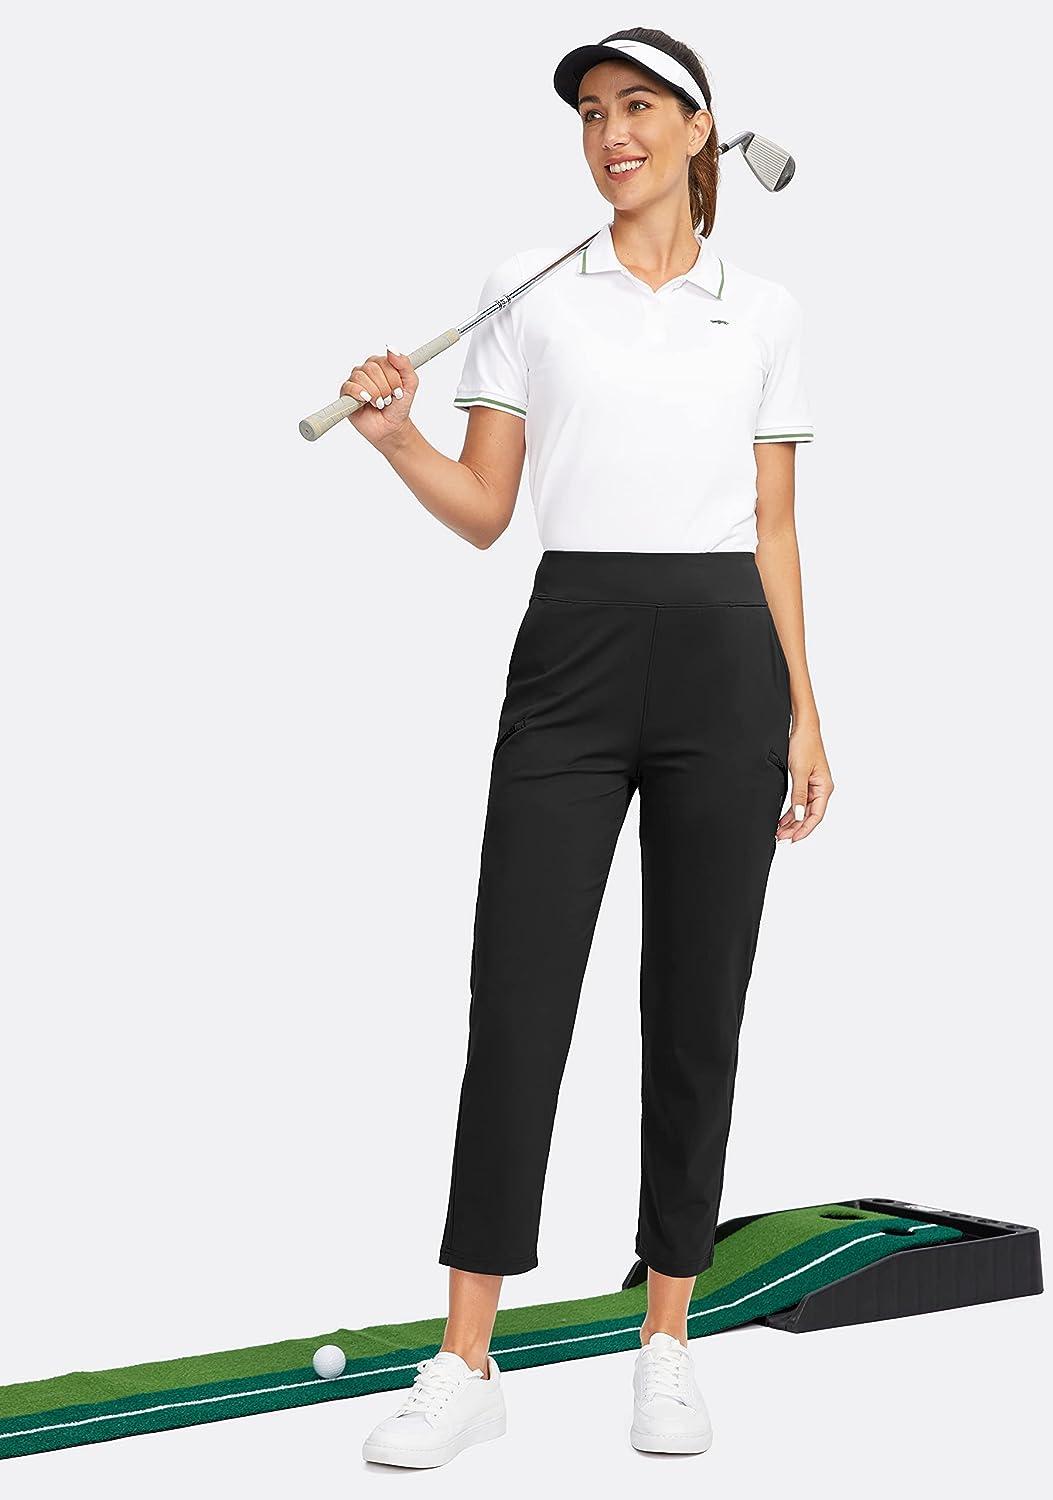  Women's Golf Pants with Zipper Pockets 7/8 Stretch